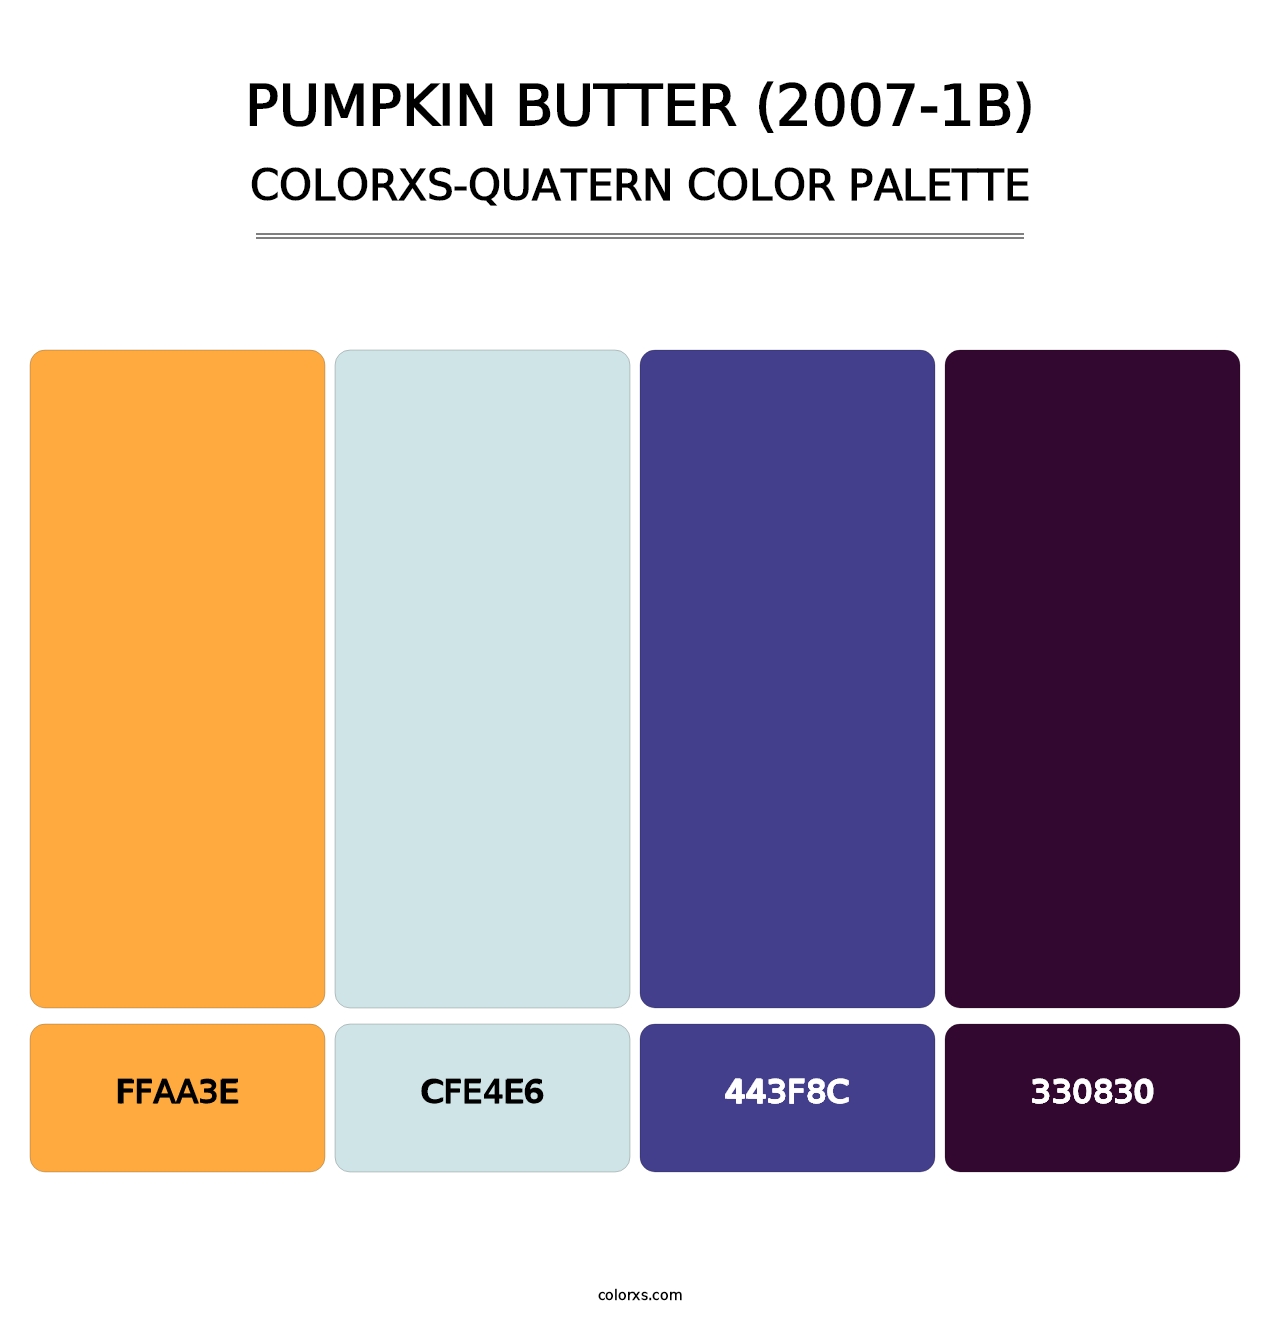 Pumpkin Butter (2007-1B) - Colorxs Quatern Palette